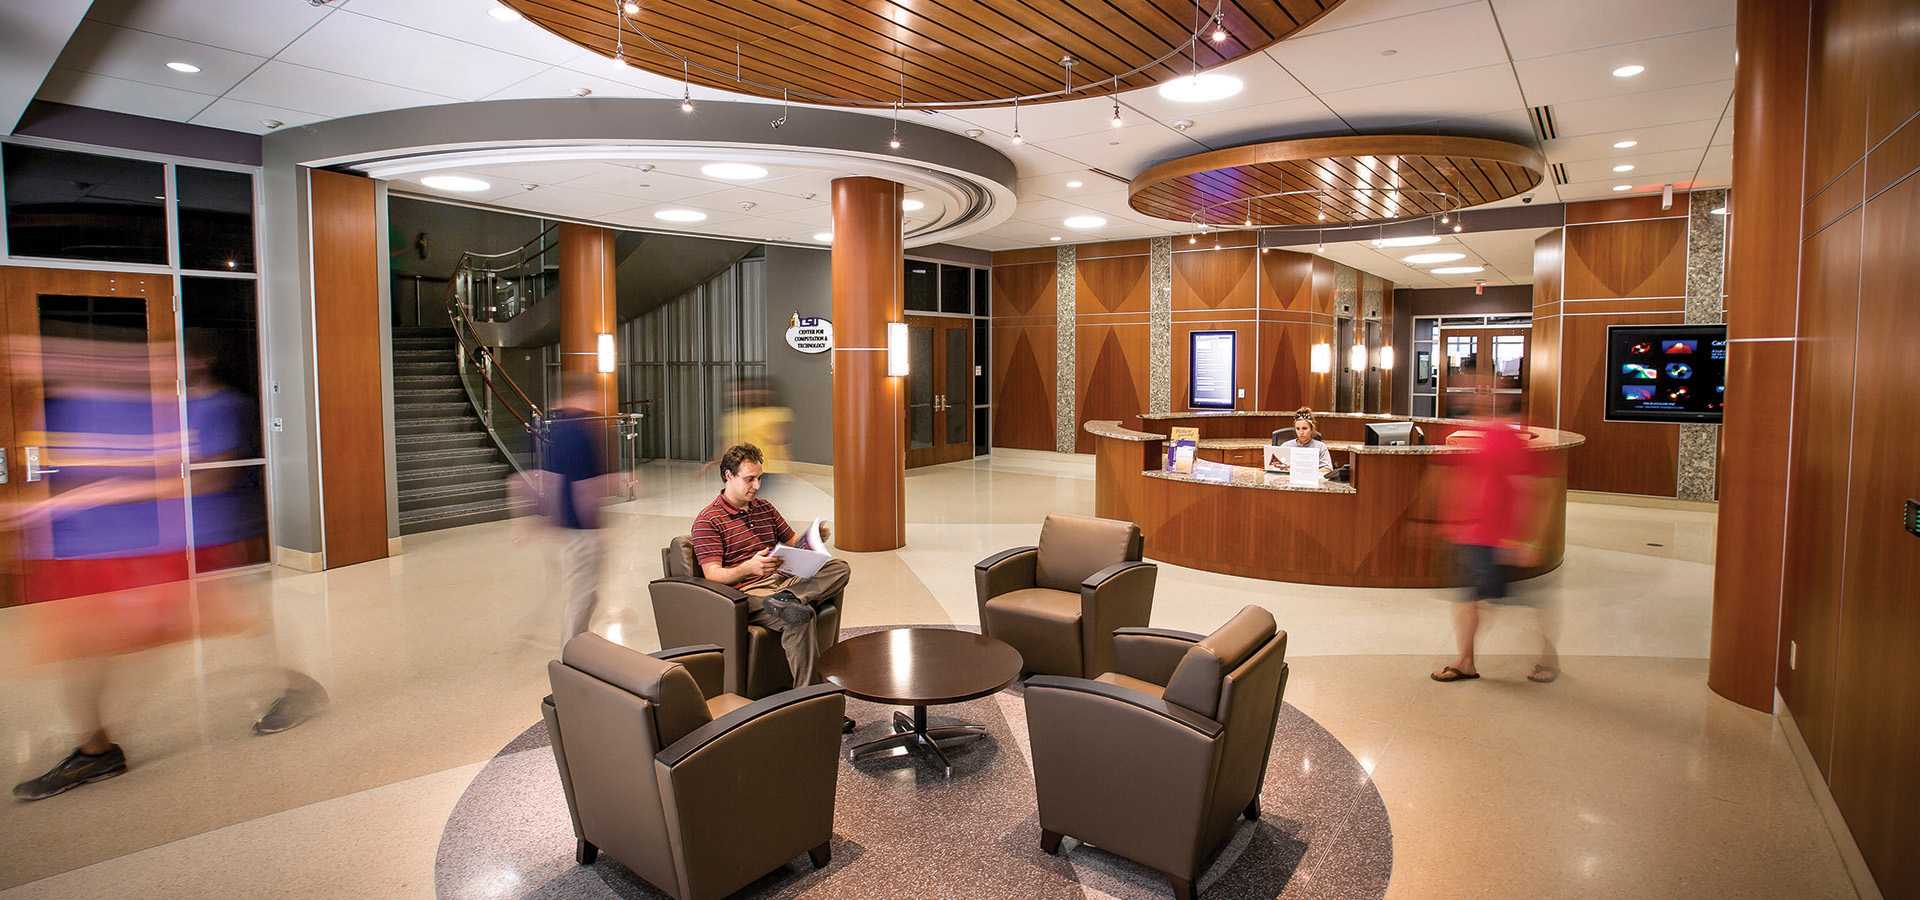 Louisiana State University (LSU) Digital Media Center Lobby